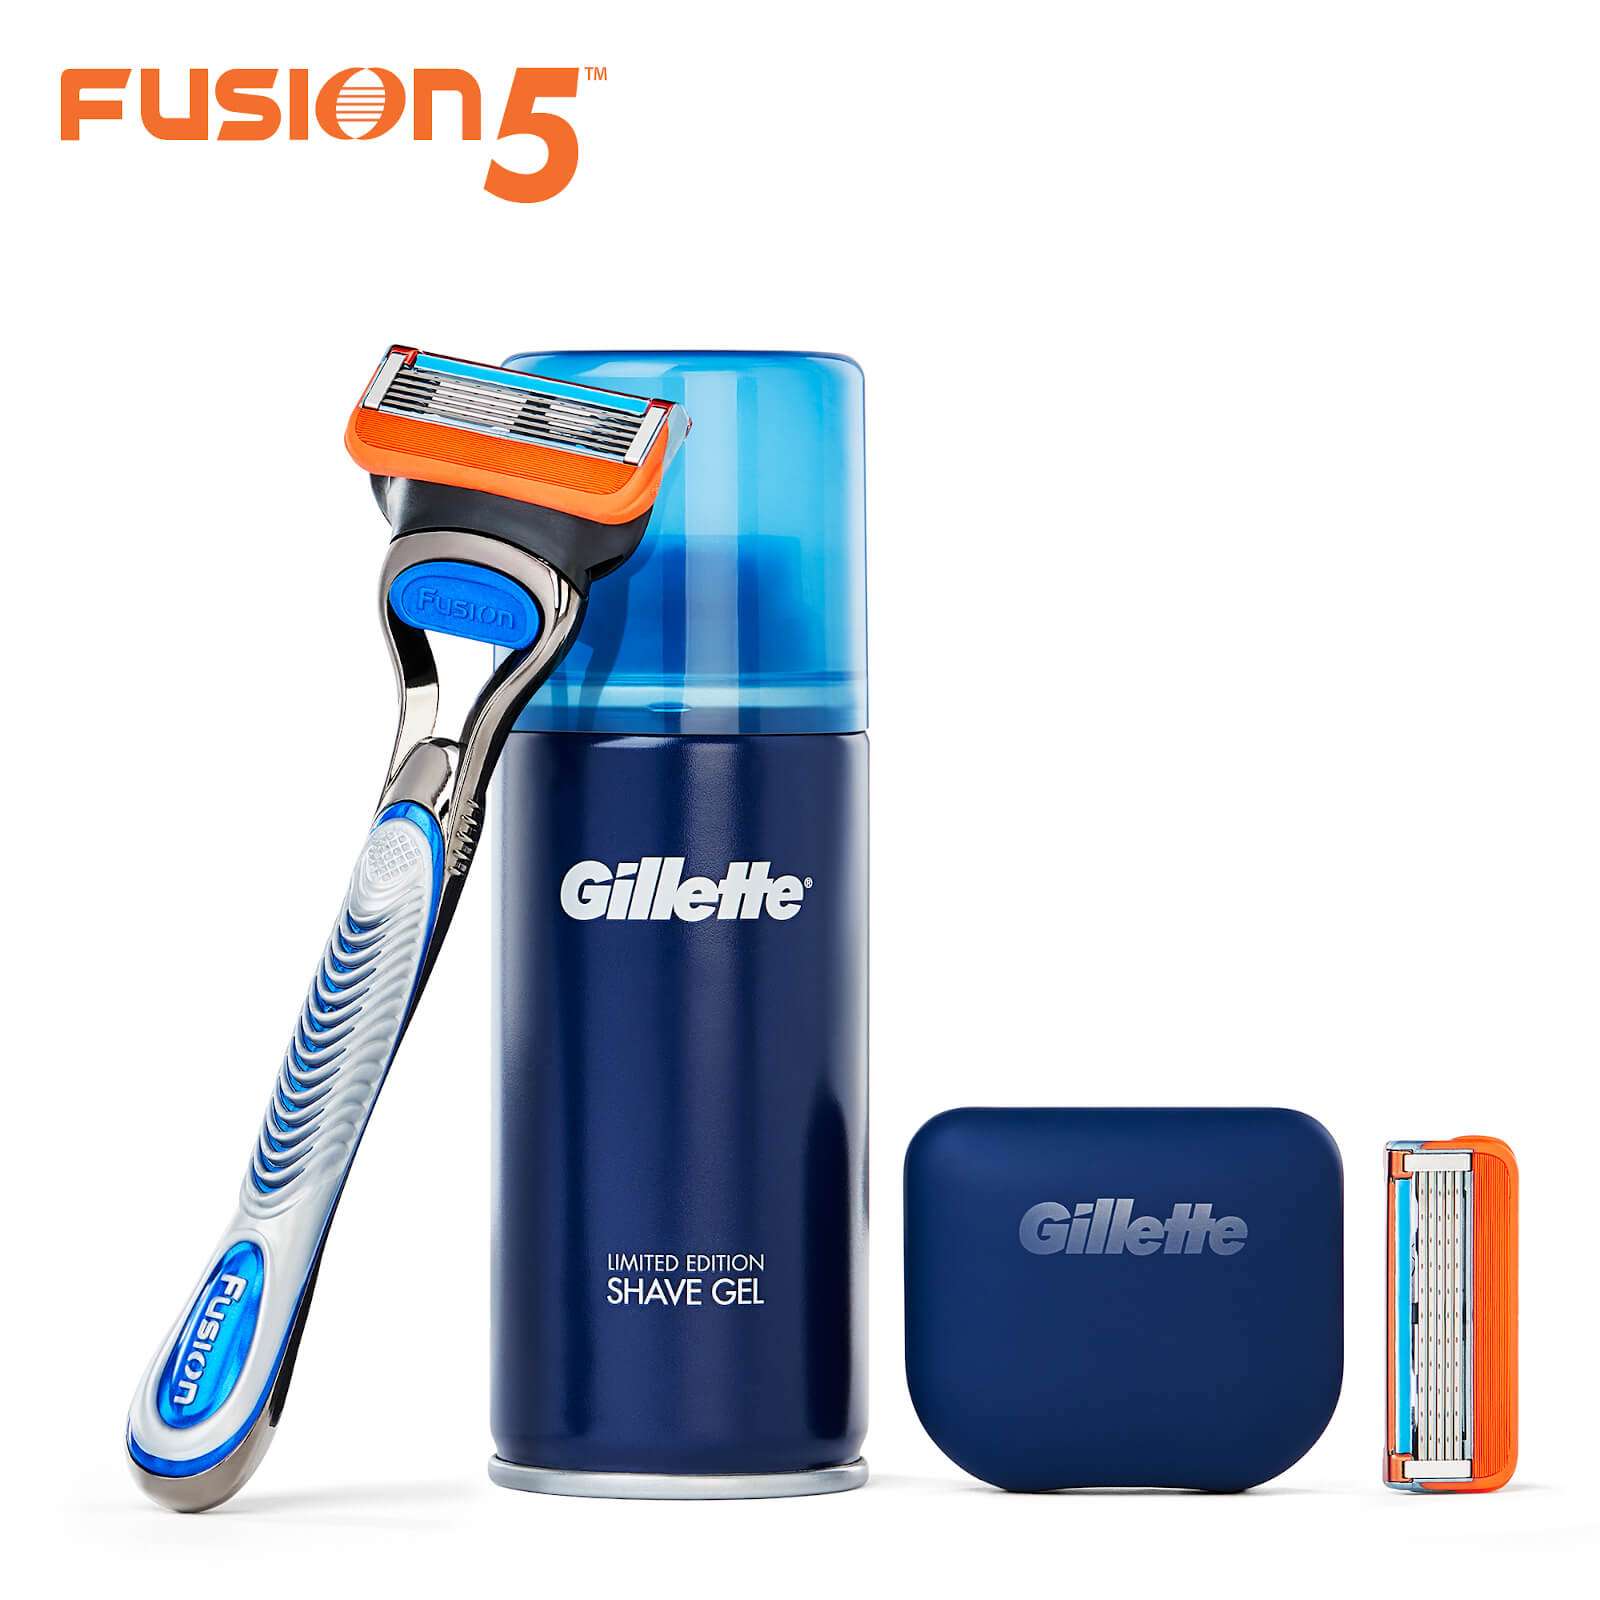 Gillette Fusion5 Starter Kit Subscription - Trial 1 - 4 Month Plan